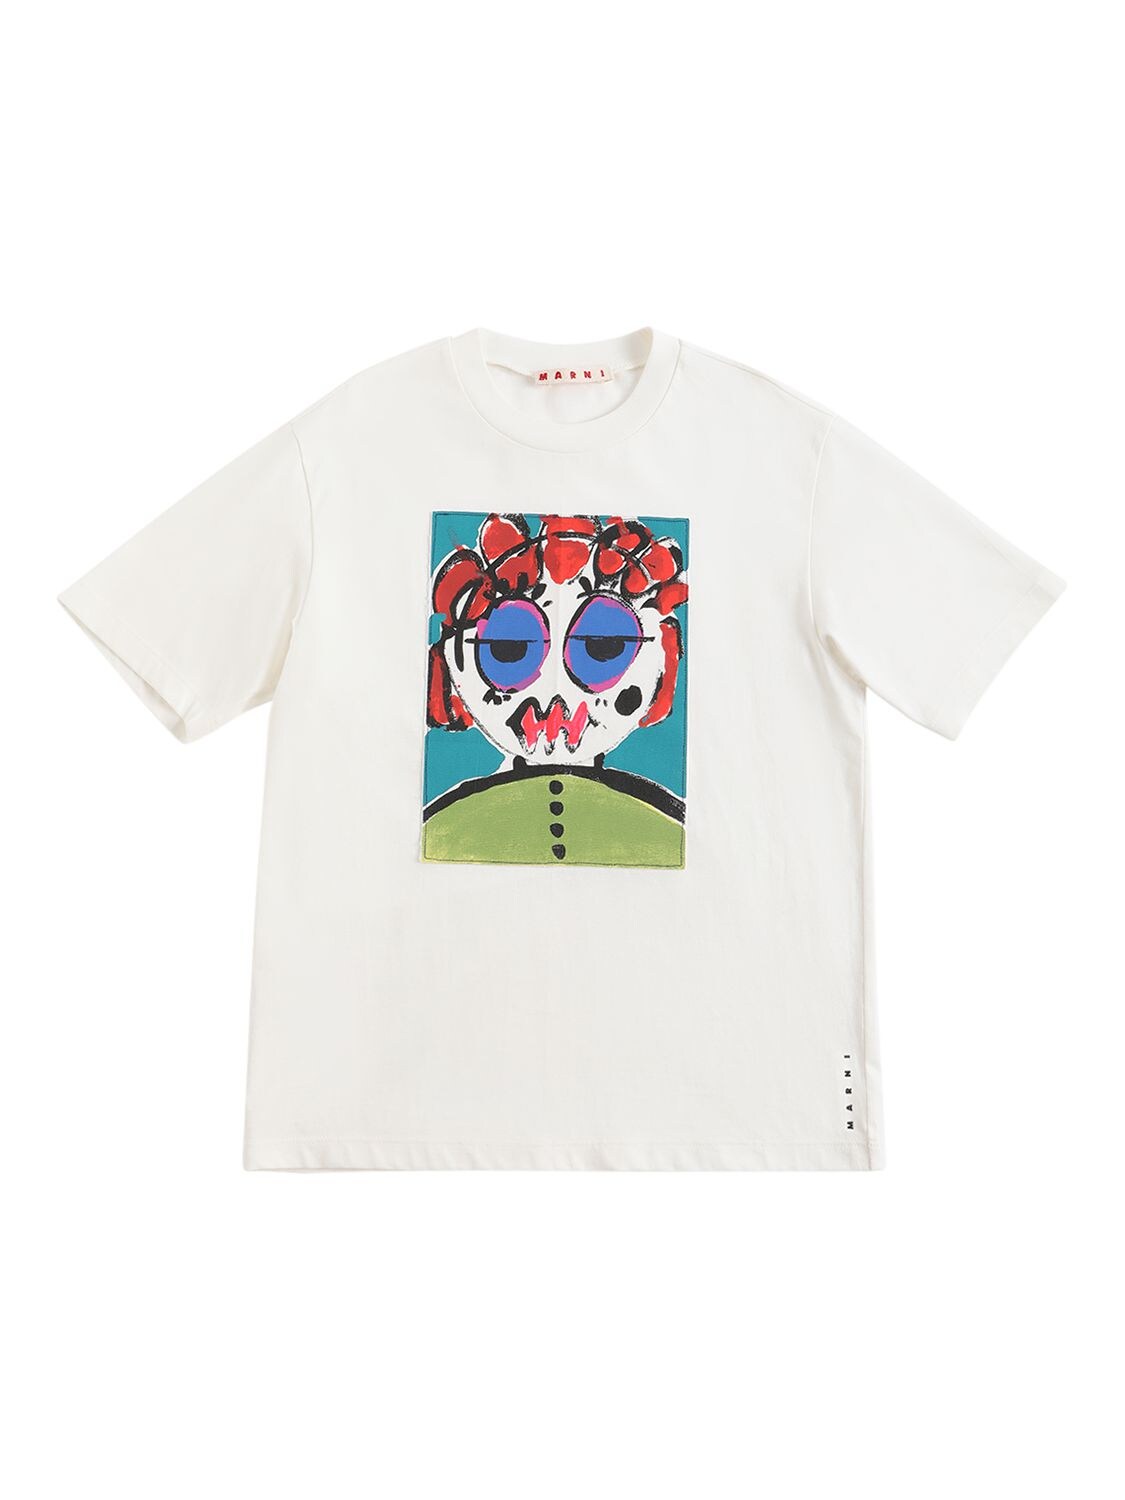 Marni Junior Kids' Printed Cotton Jersey T-shirt In White